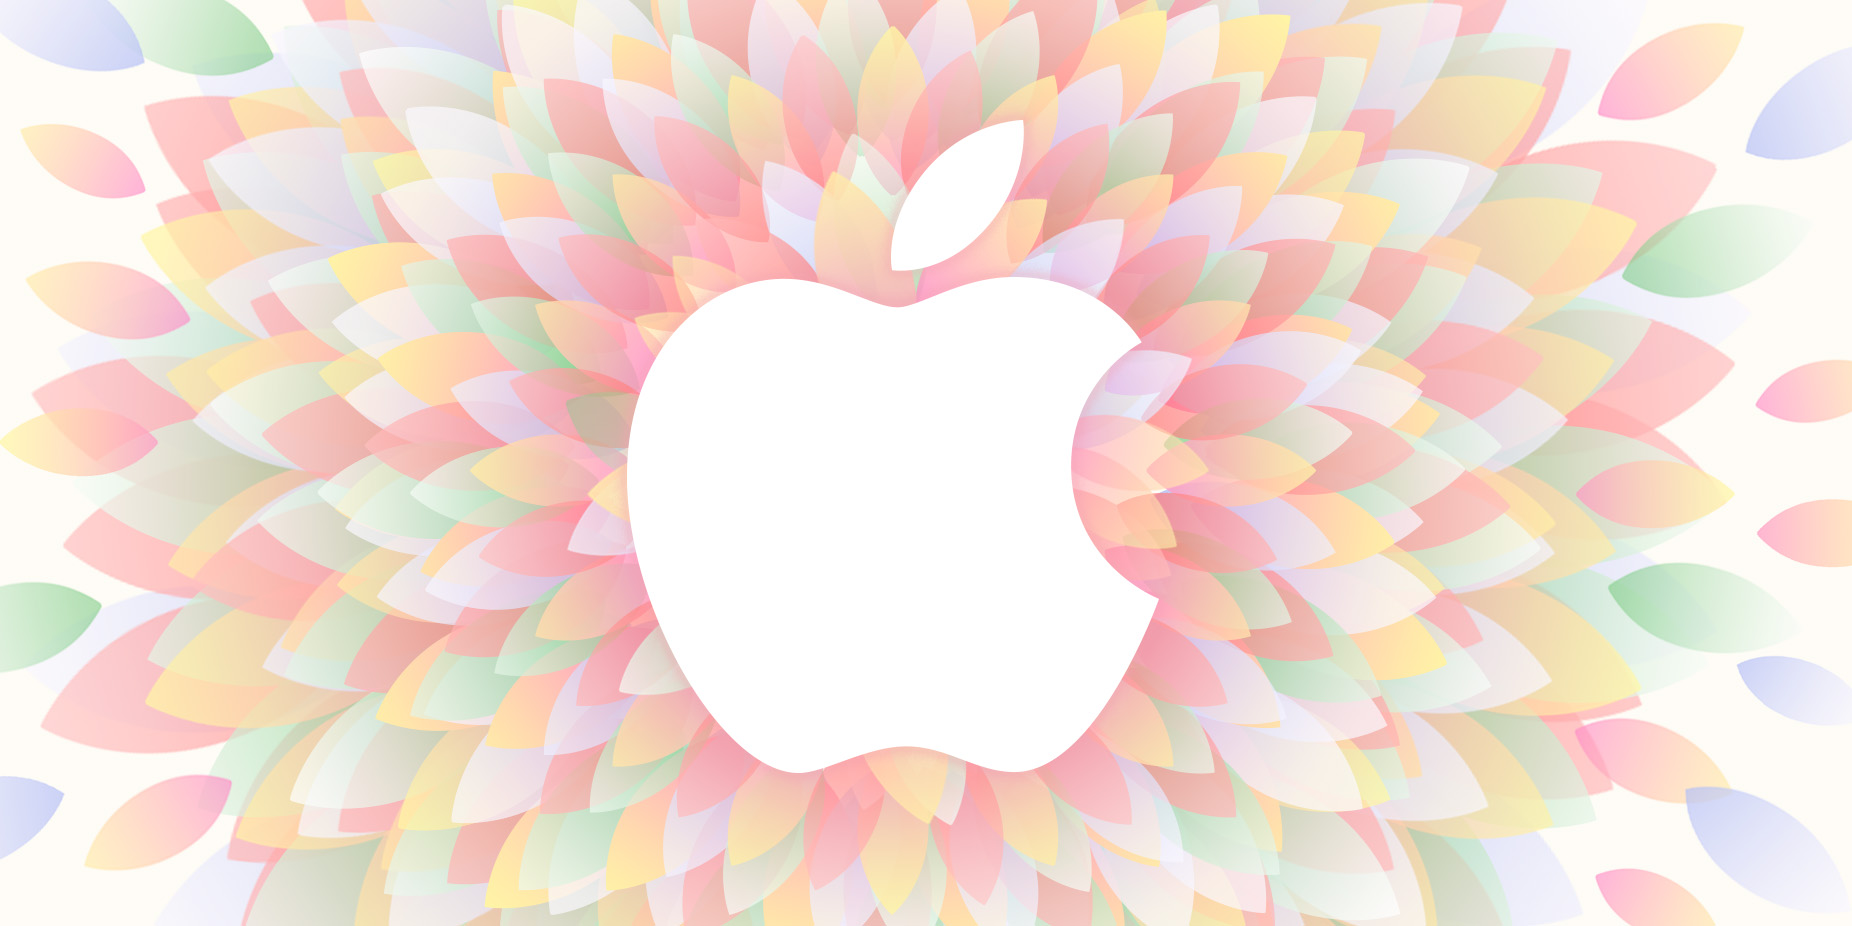 Apple ปล่อย iOS 9.3.1 มาแก้บั๊กของ Safari แล้ว